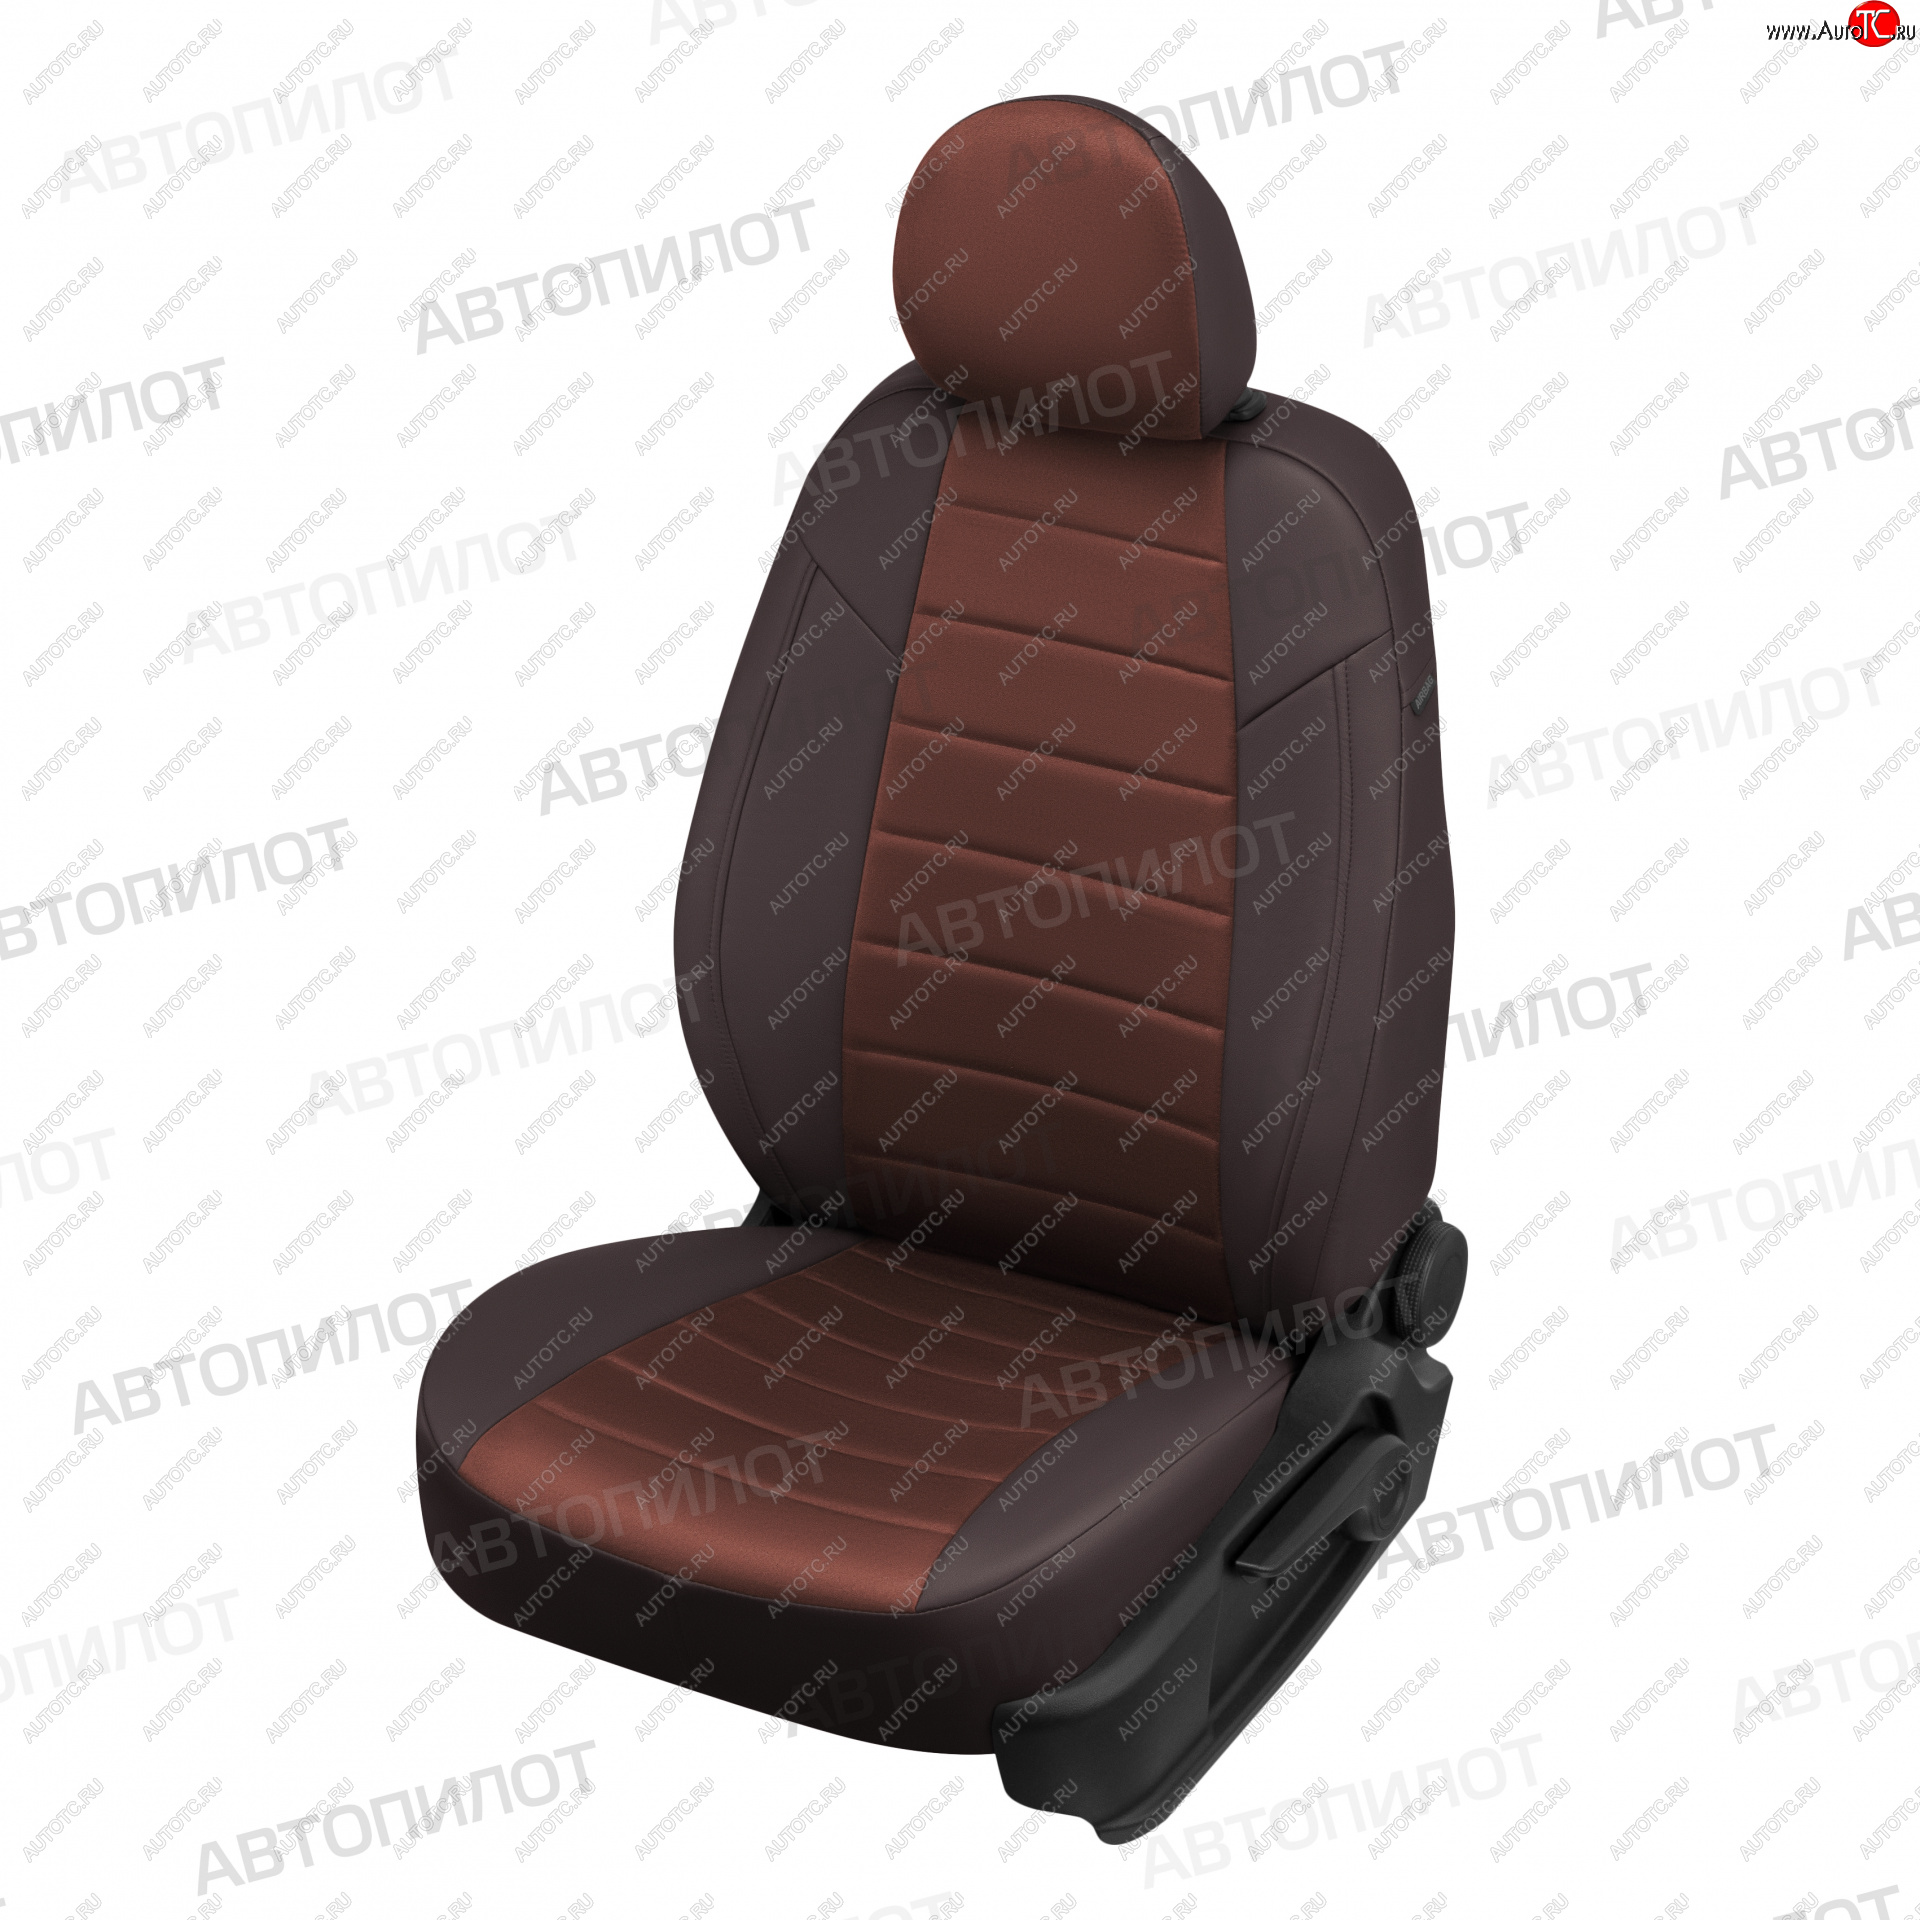 8 499 р. Чехлы сидений (3 места, экокожа/алькантара) Автопилот  Ford Transit  3 (2006-2014) (шоколад)